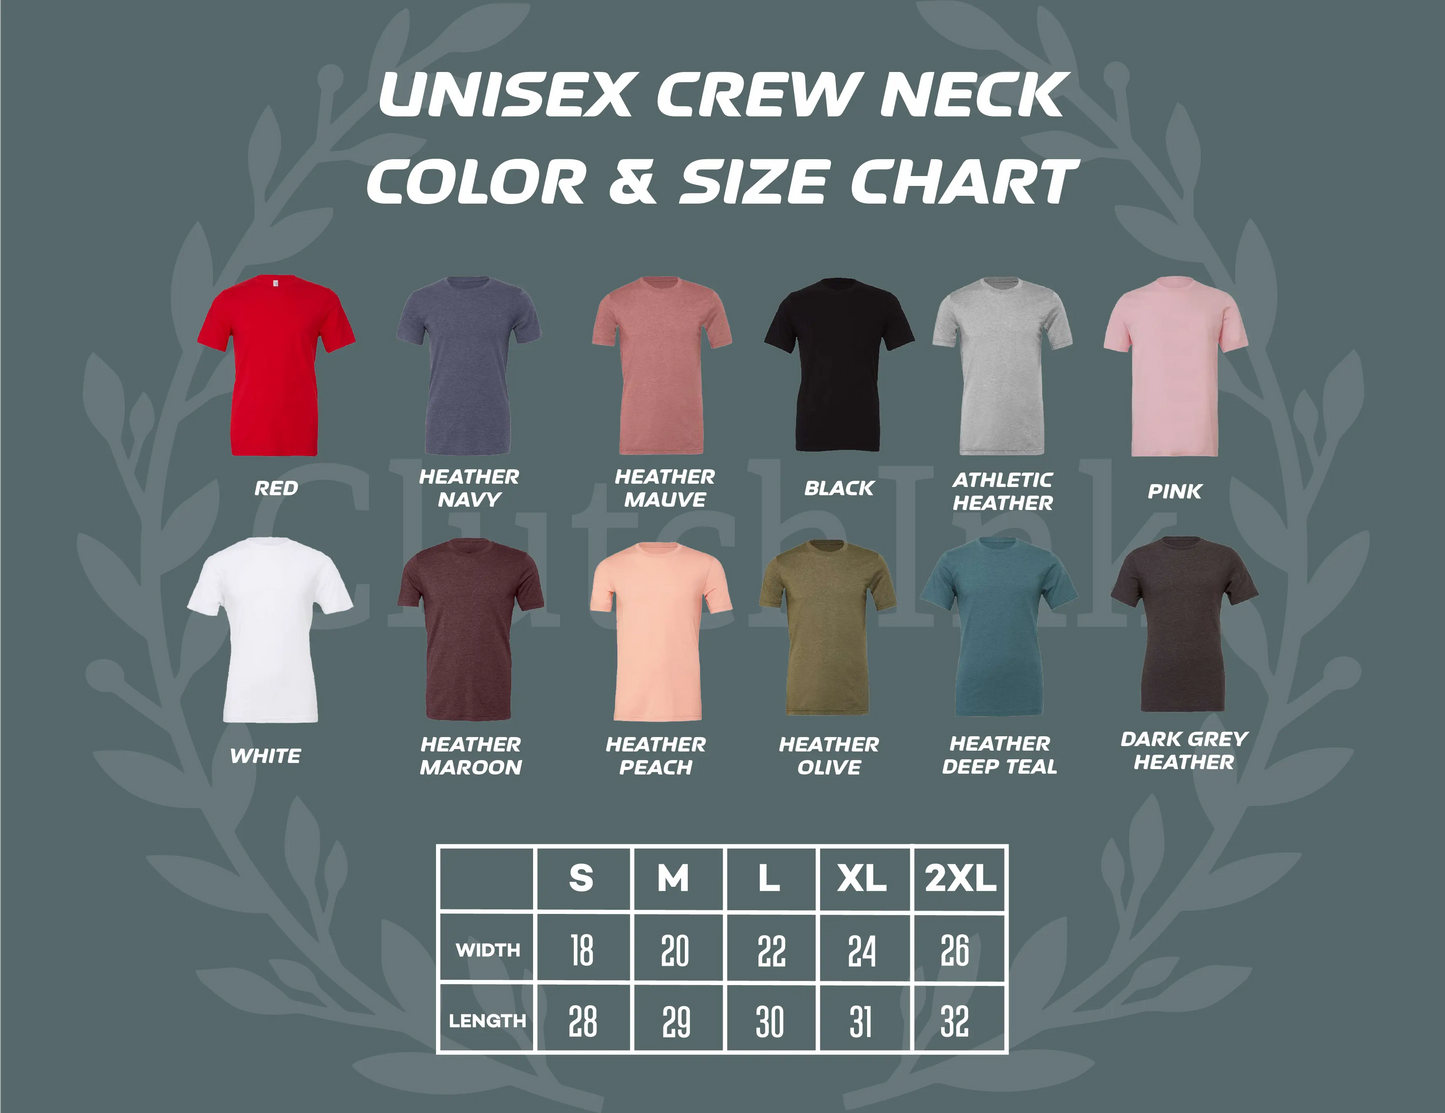 Maid of Honor Unisex T-shirt